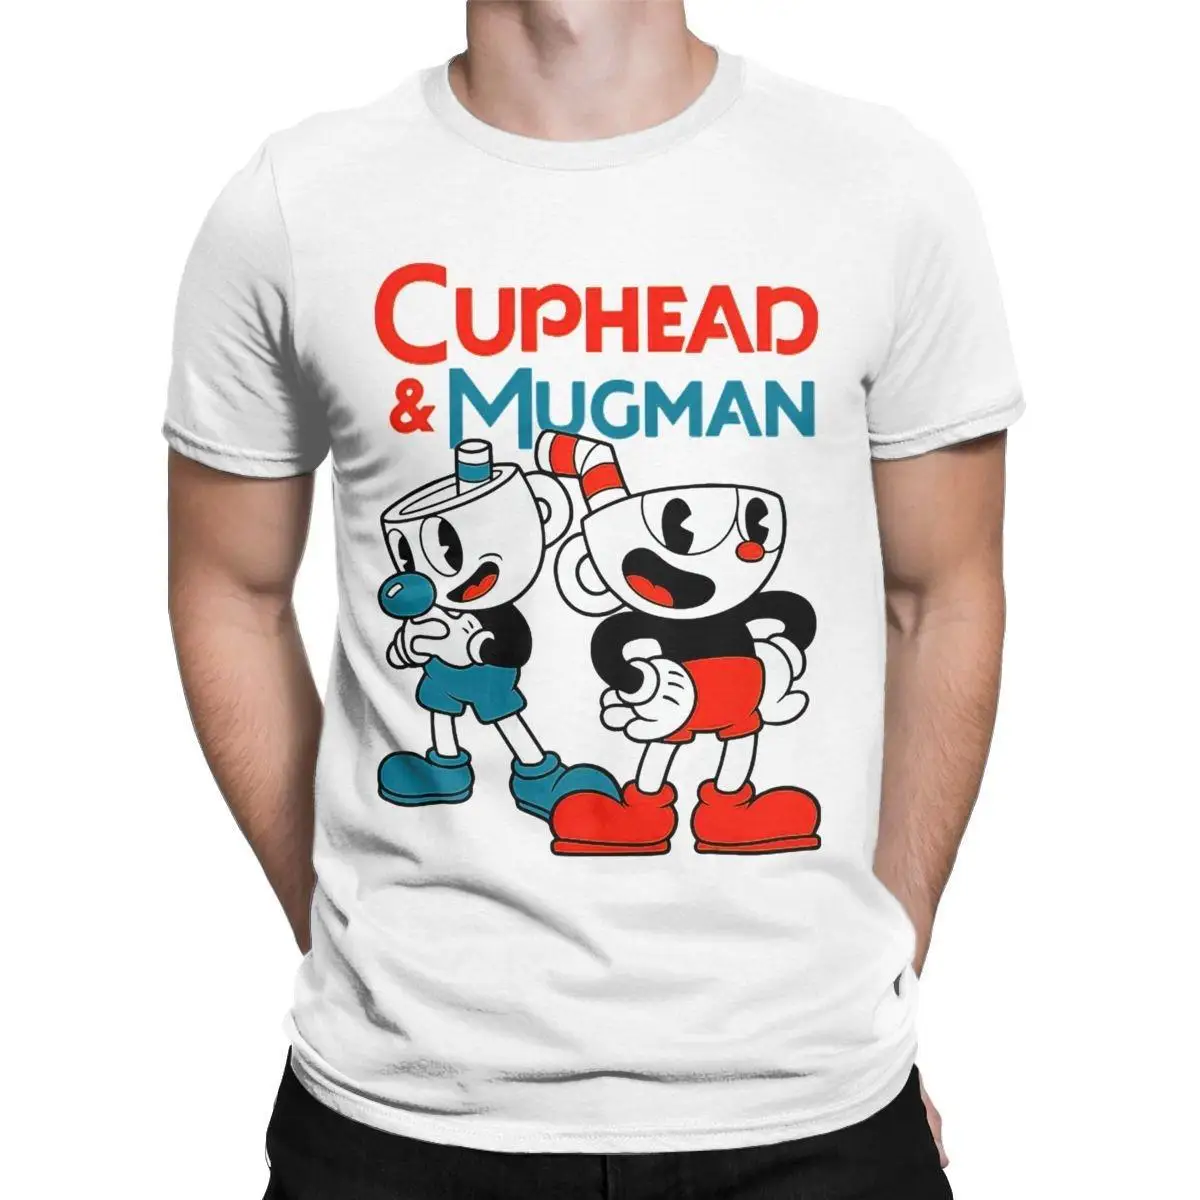 

Men's T-Shirts Cuphead & Mugman Retro Games Humor Pure Cotton Tees Short Sleeve T Shirt Round Collar Tops Adult